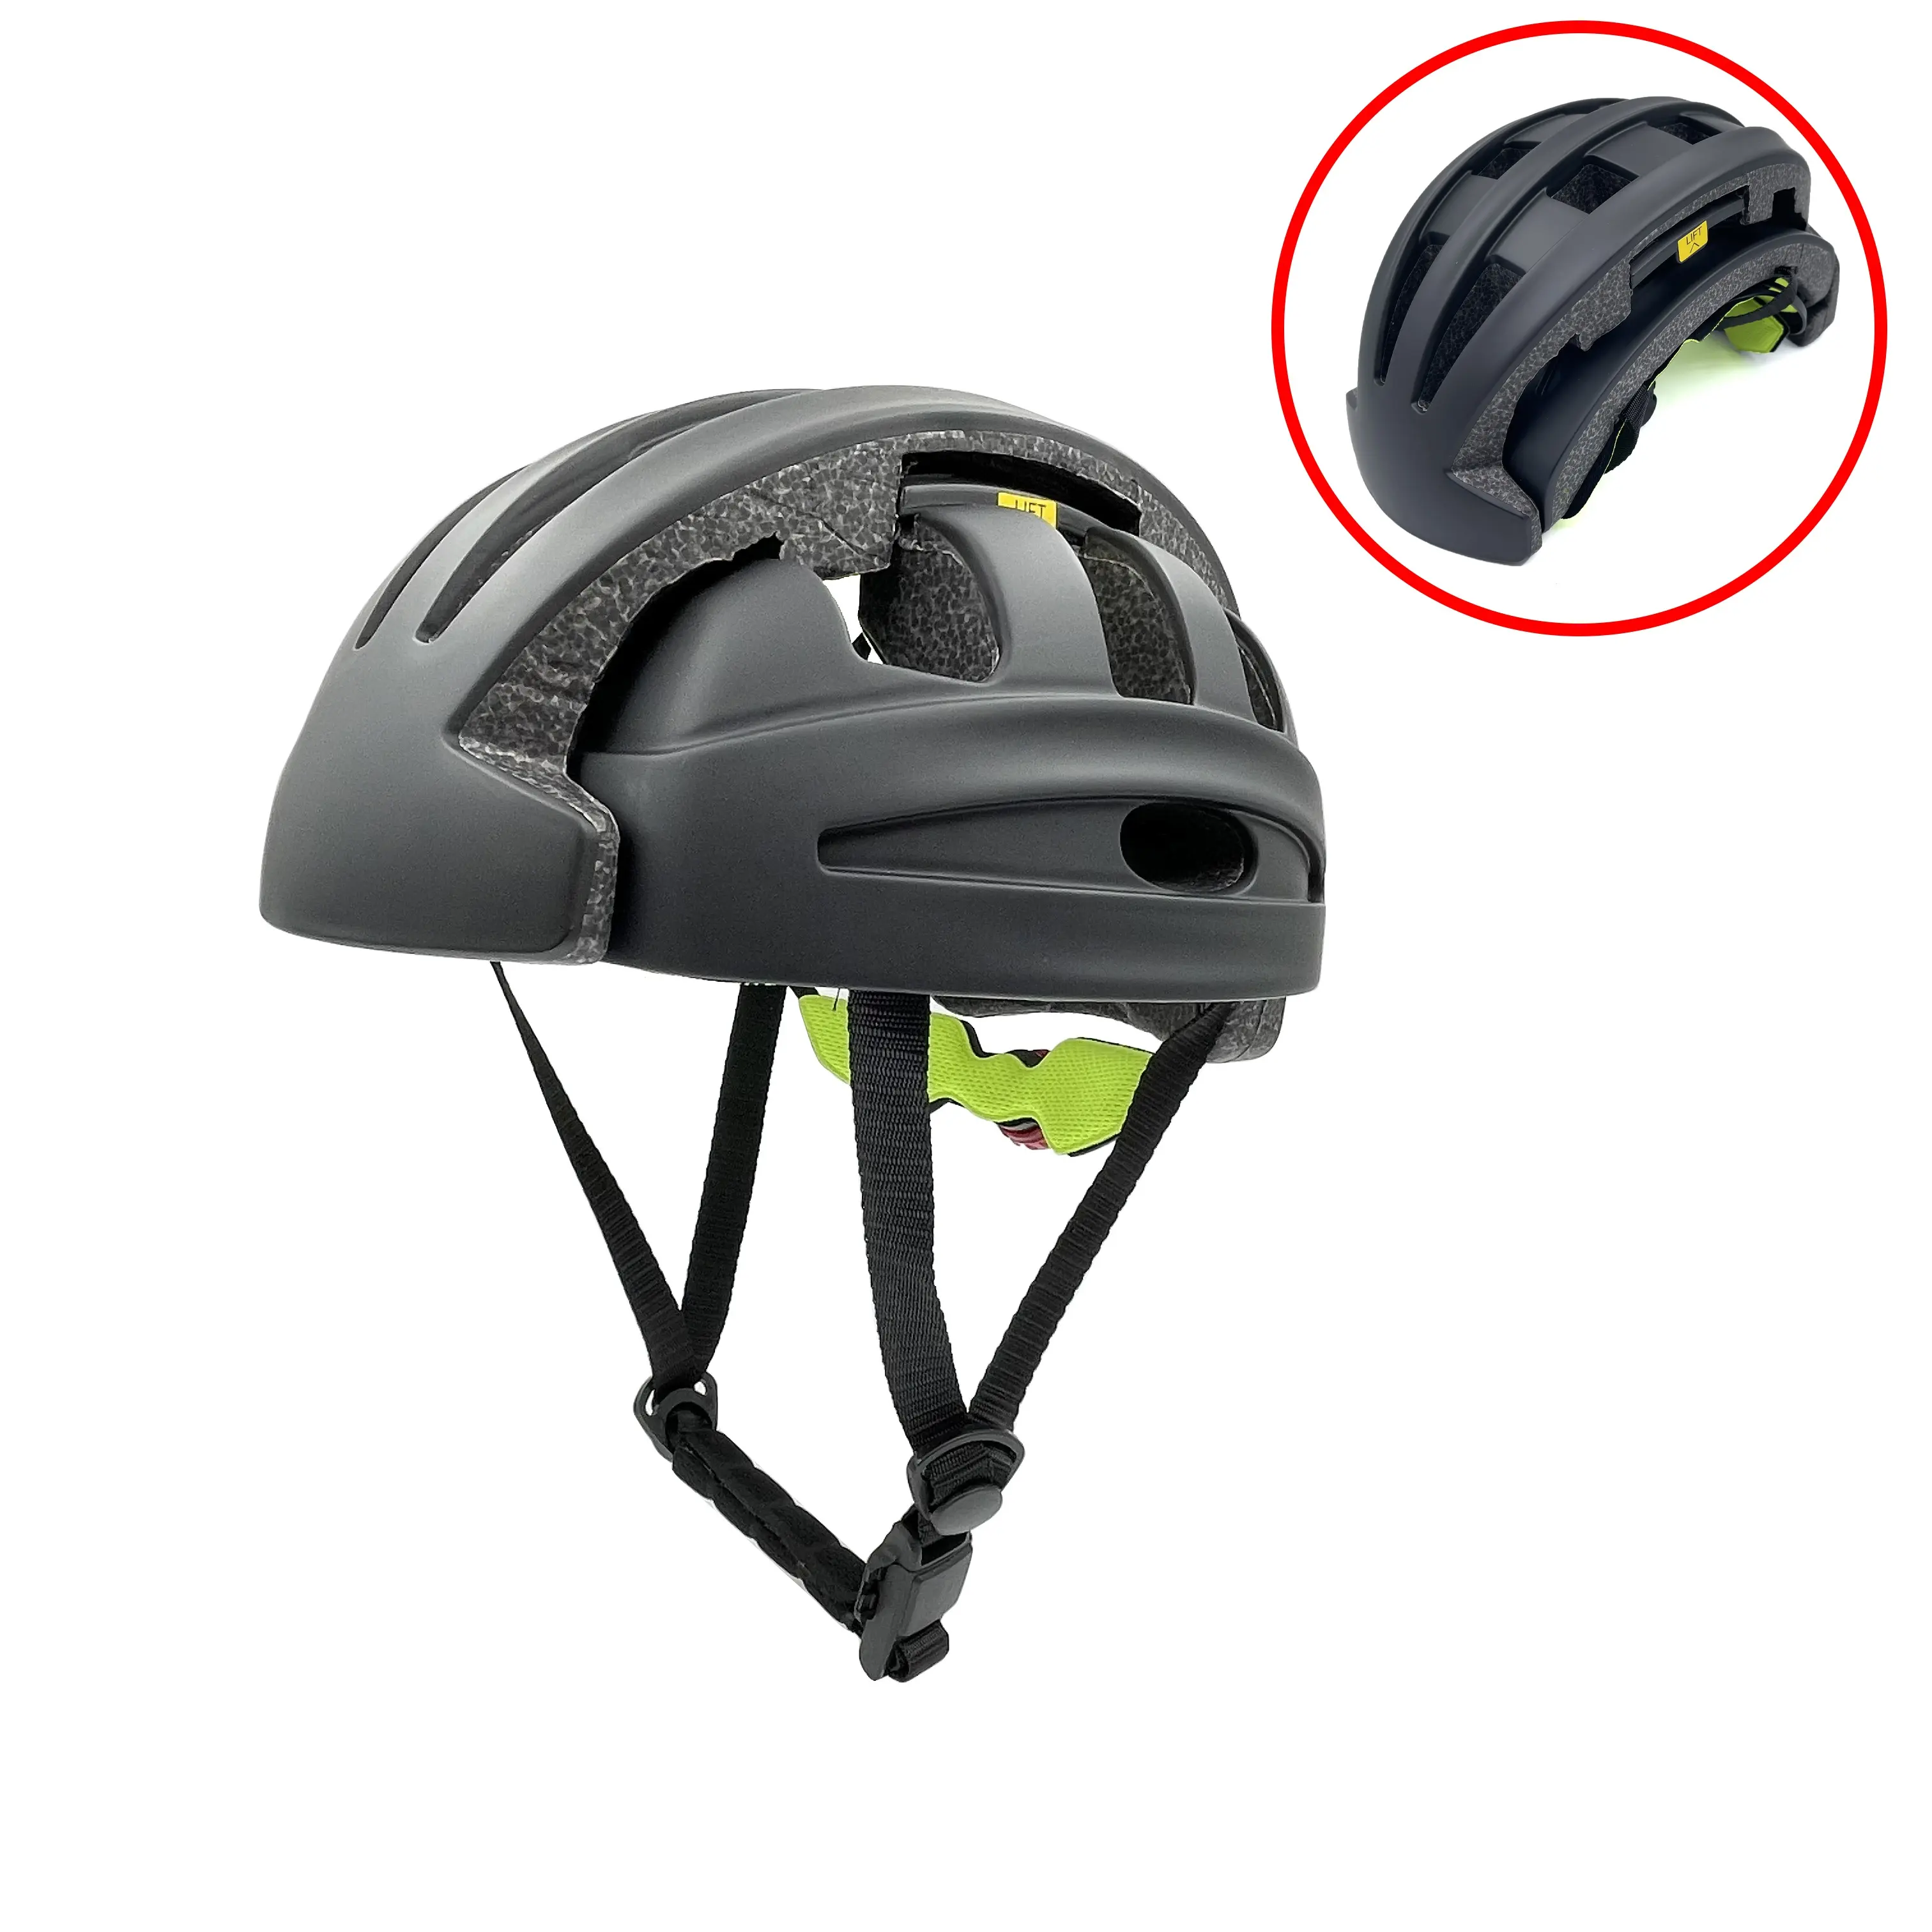 REYGEAK New Folding Comfortable Breathable Bicycle Helmet Safety Bike Foldable Helmet With Rear Light Unisex Cycling Gear